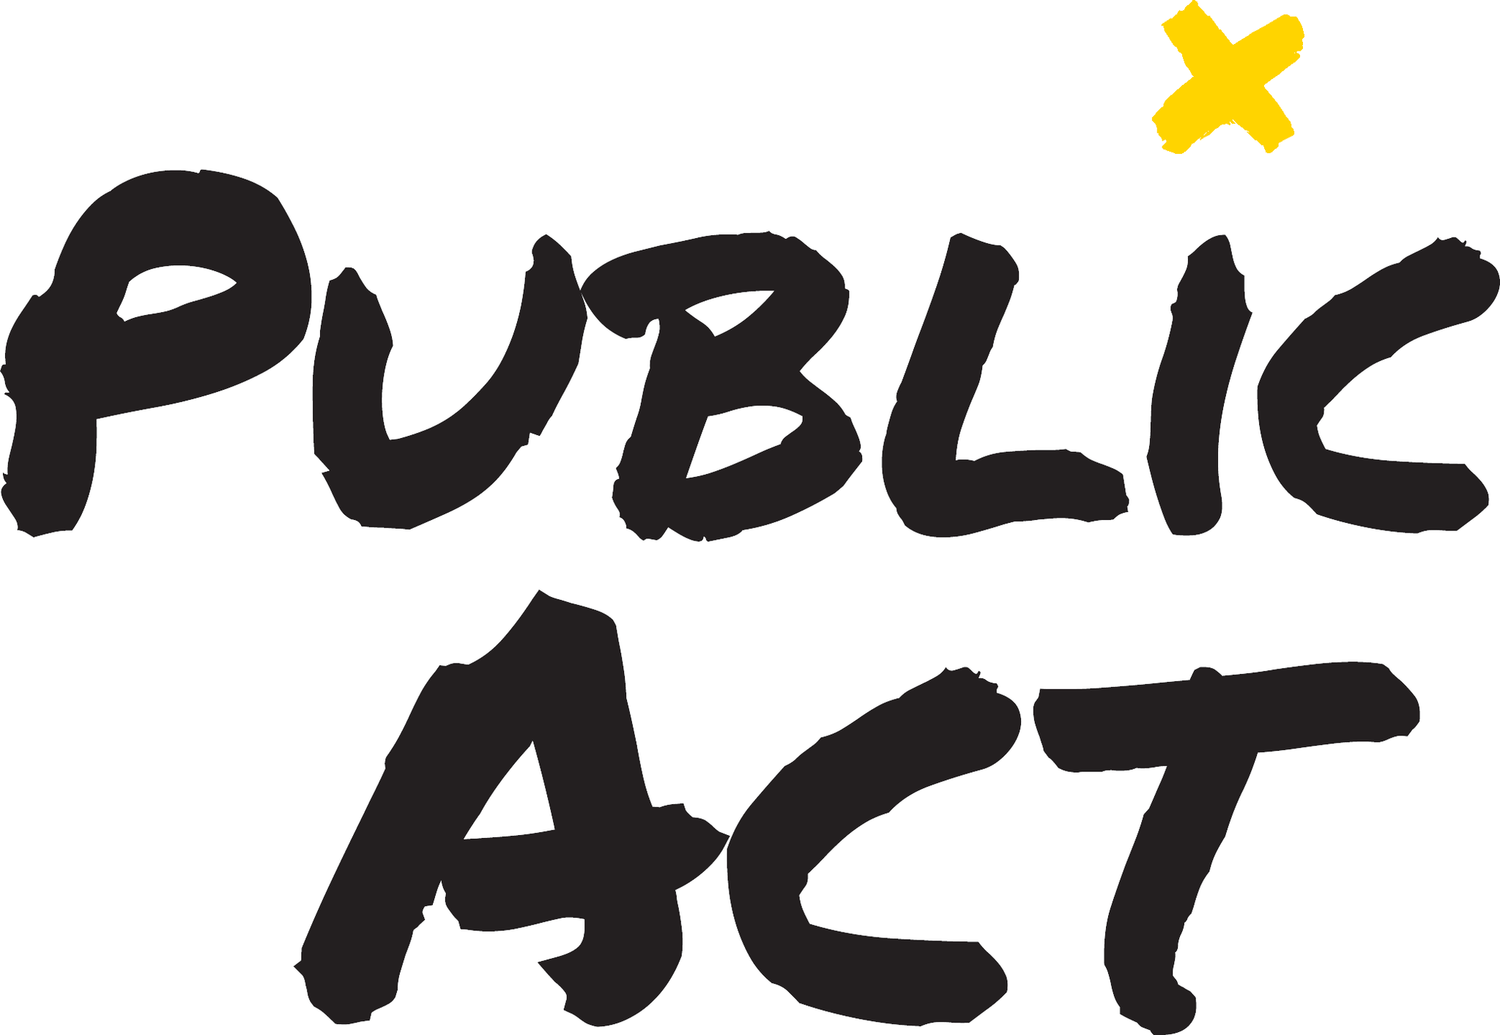 Public Act